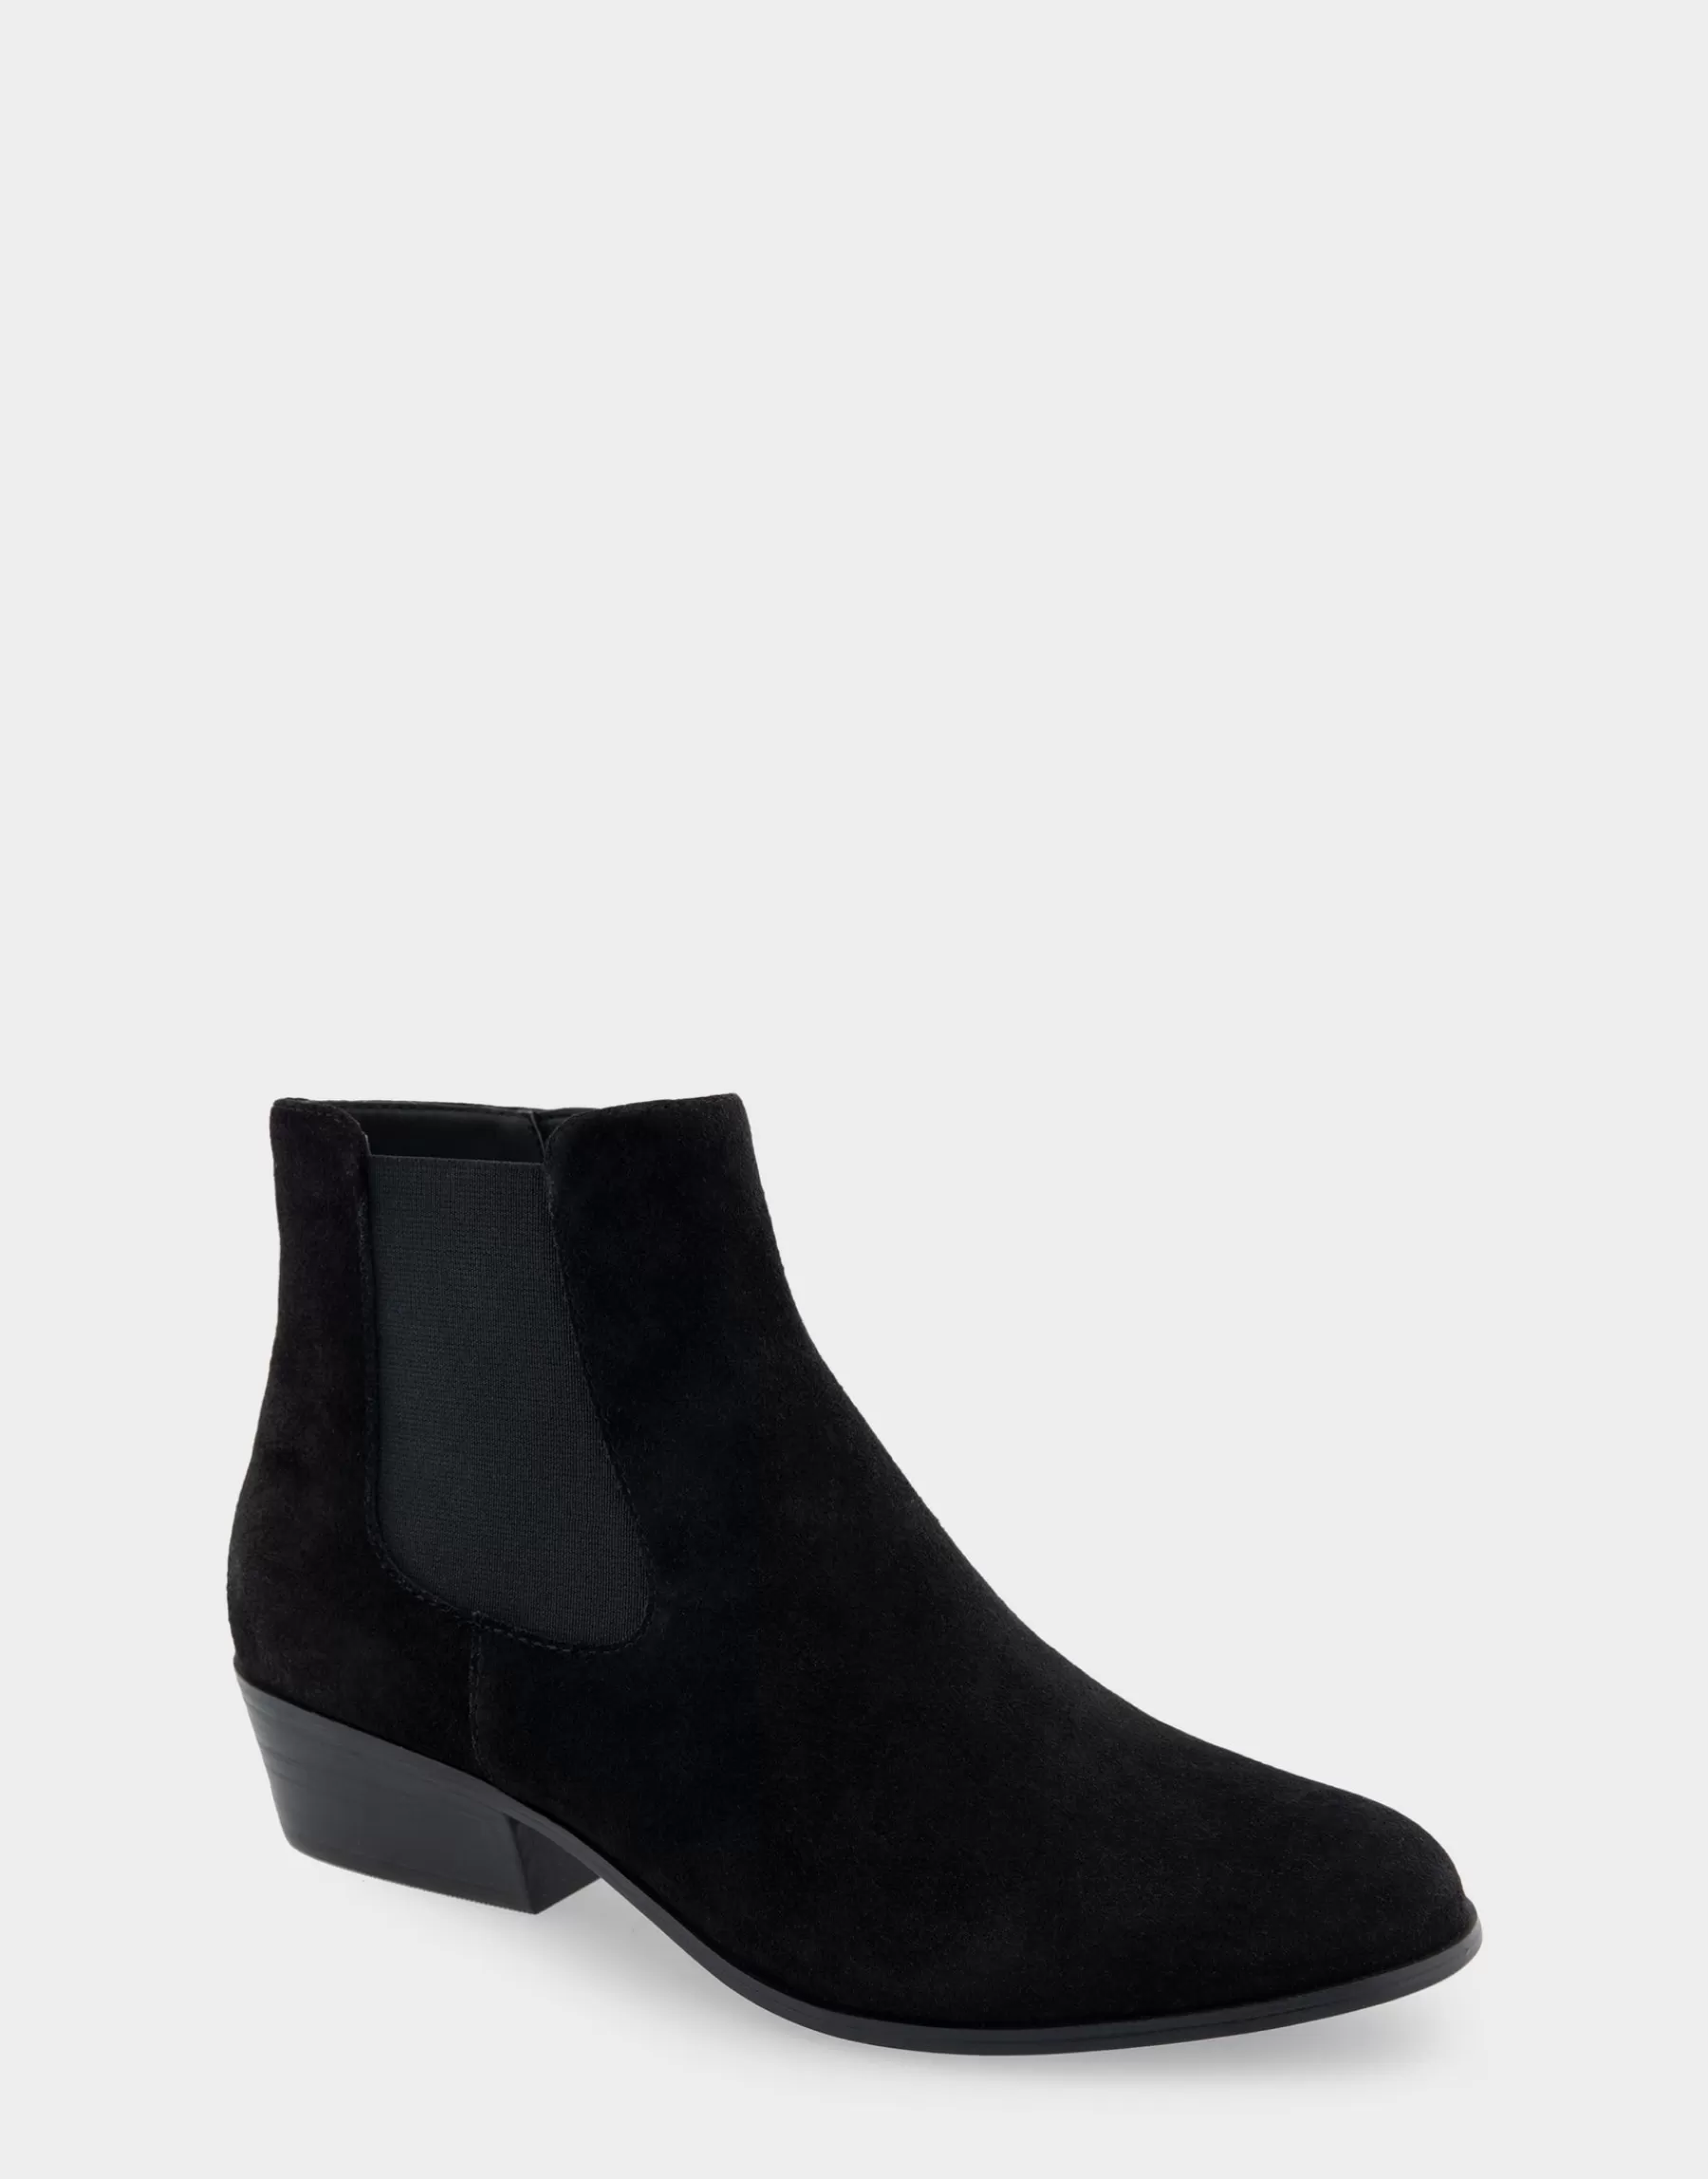 Aerosoles Comfortable Women's Ankle Boot in Black Genuine Suede Sale